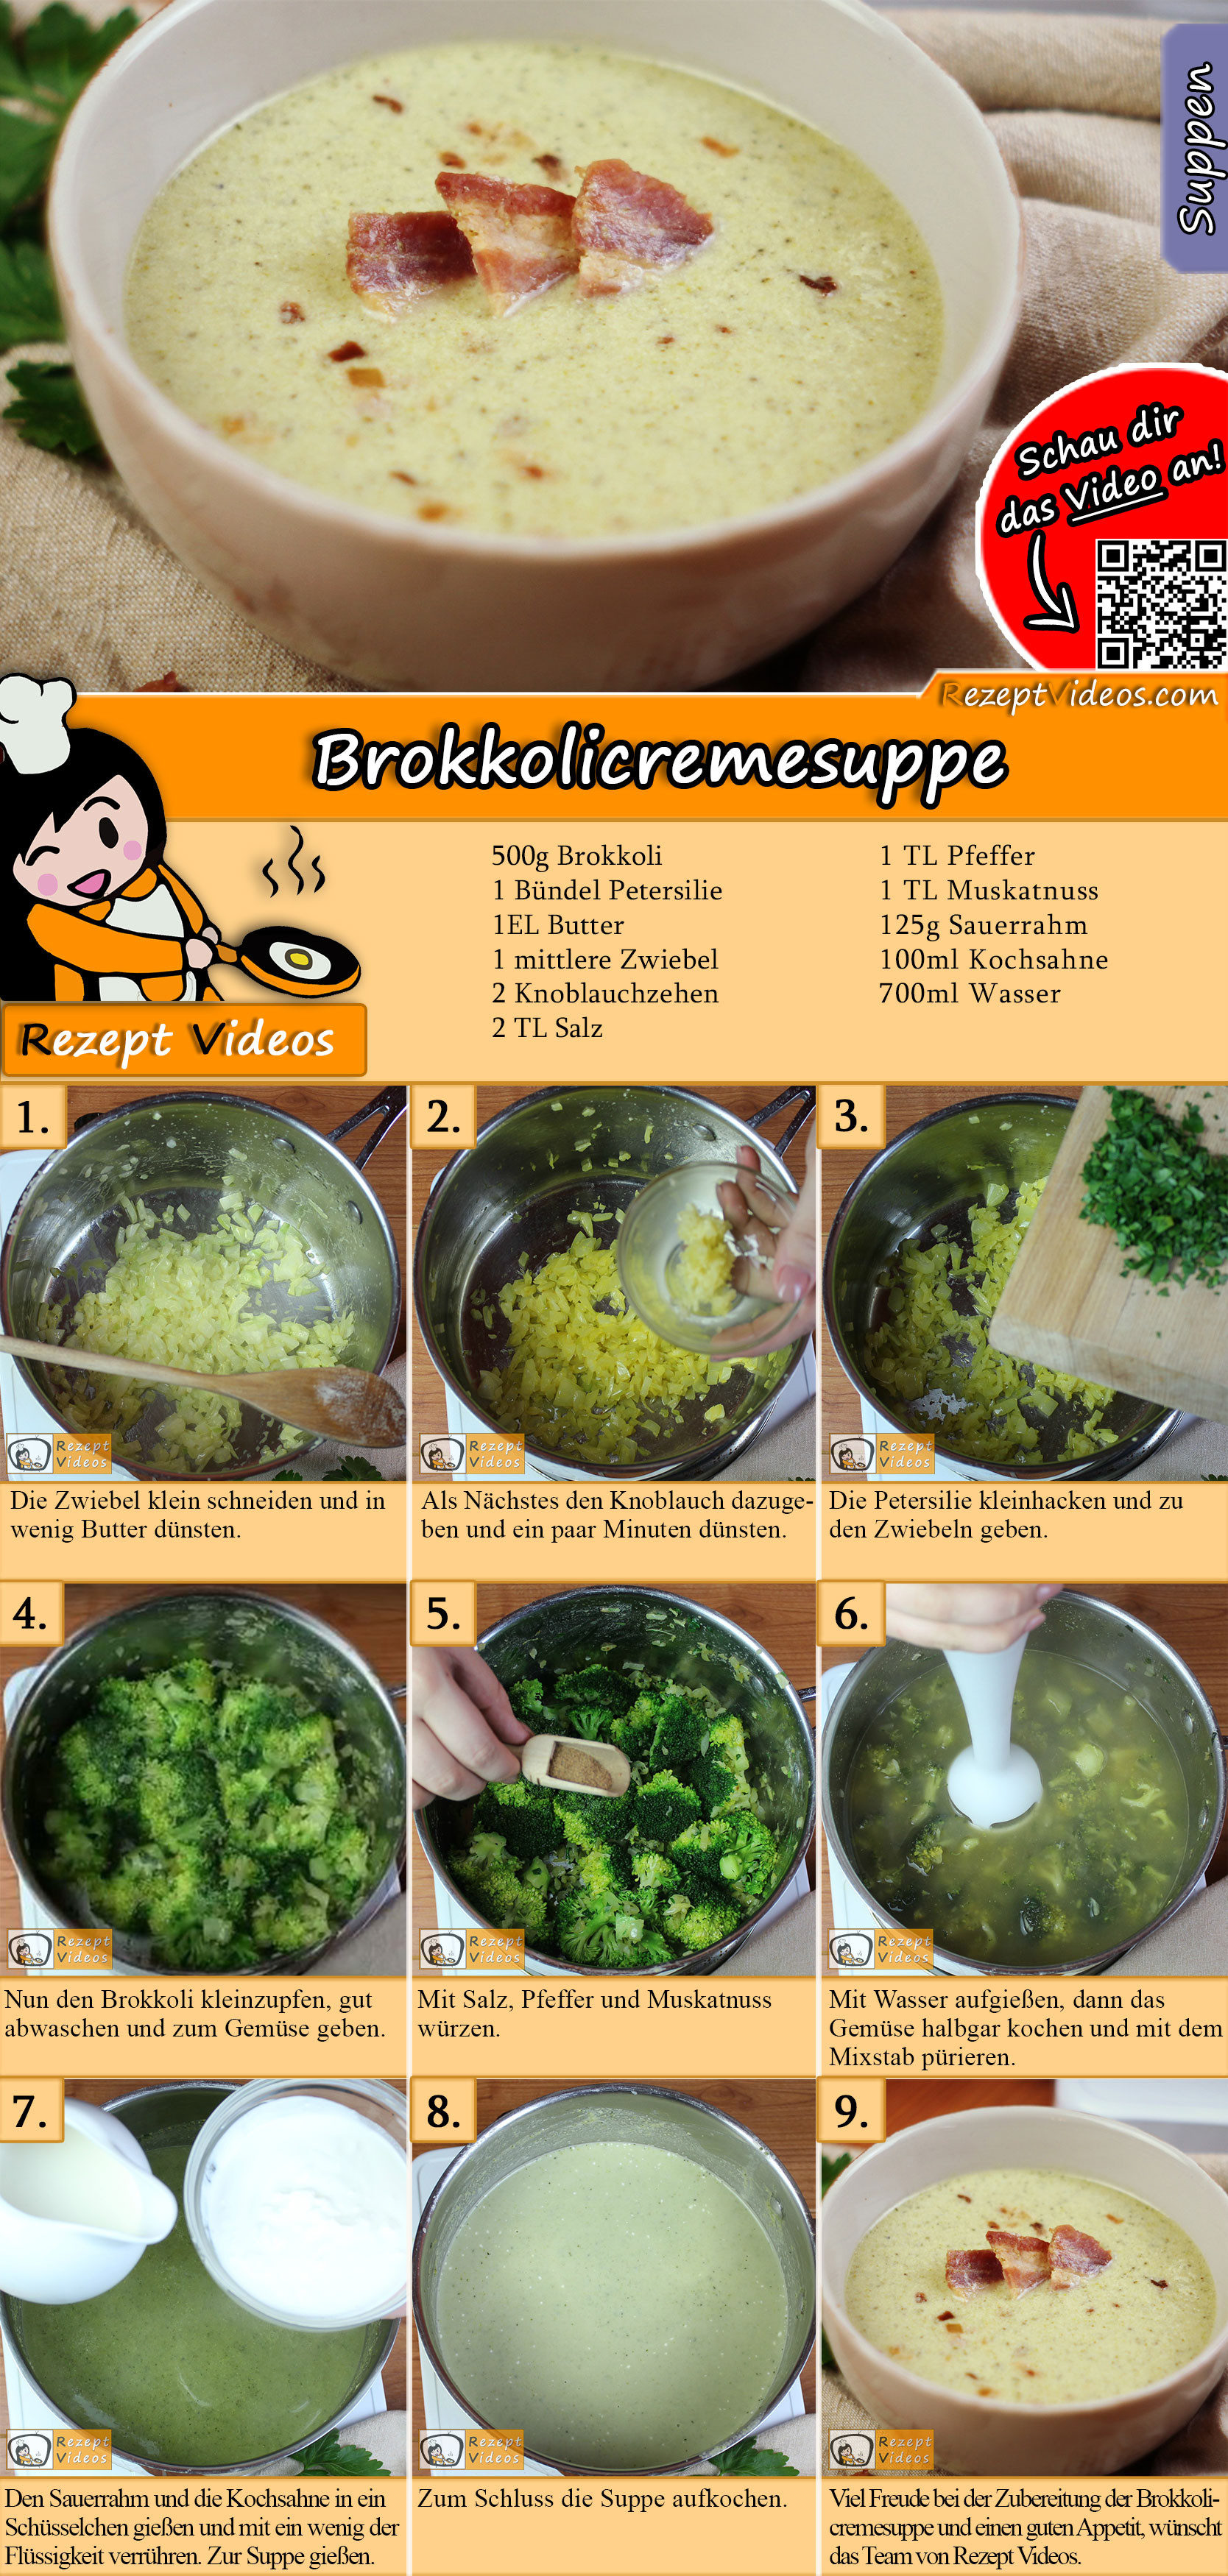 Brokkolicremesuppe Rezept mit Video